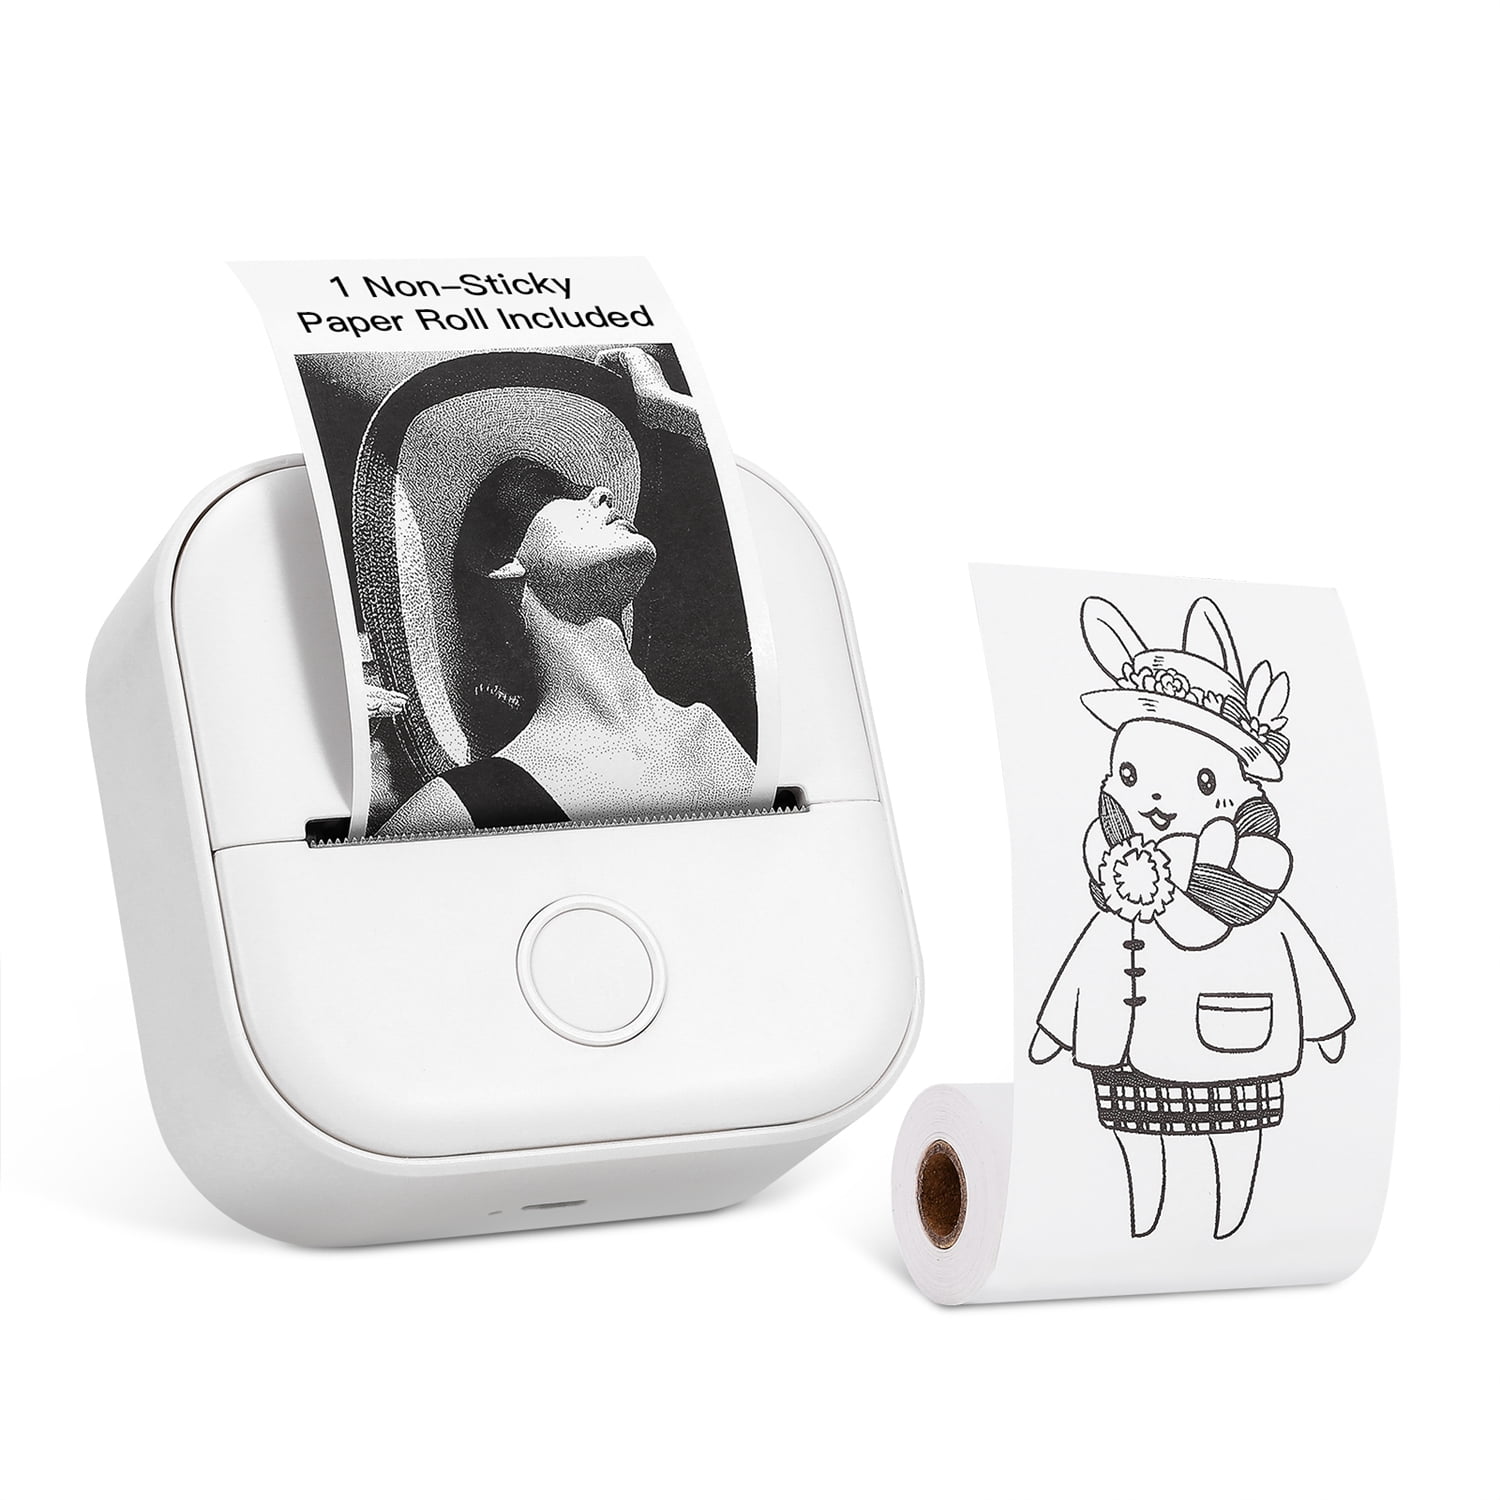 Papel para mini impresora - Phomemo T02 – Ruki Store